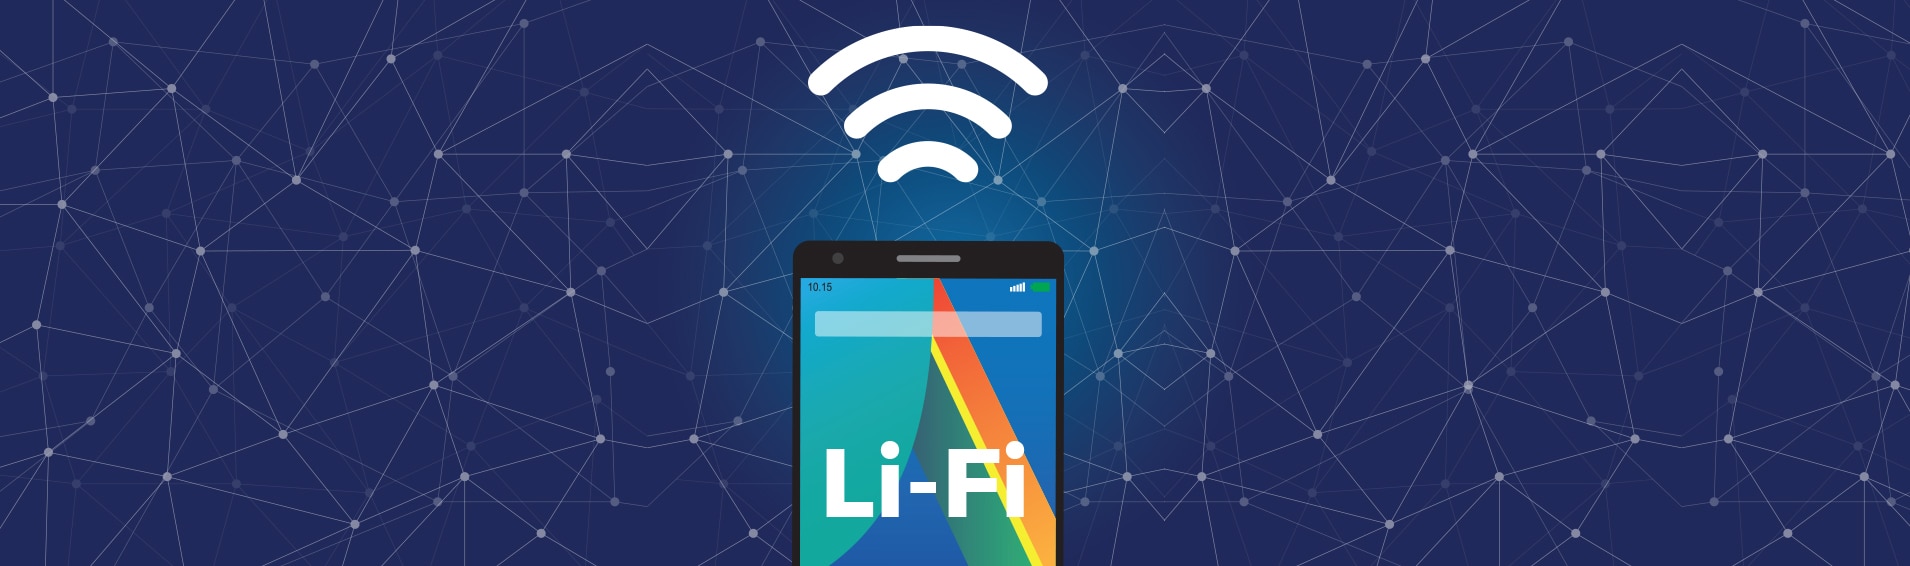 Will Light Fidelity (Li-Fi) Disrupt the Digital Communications Industry?